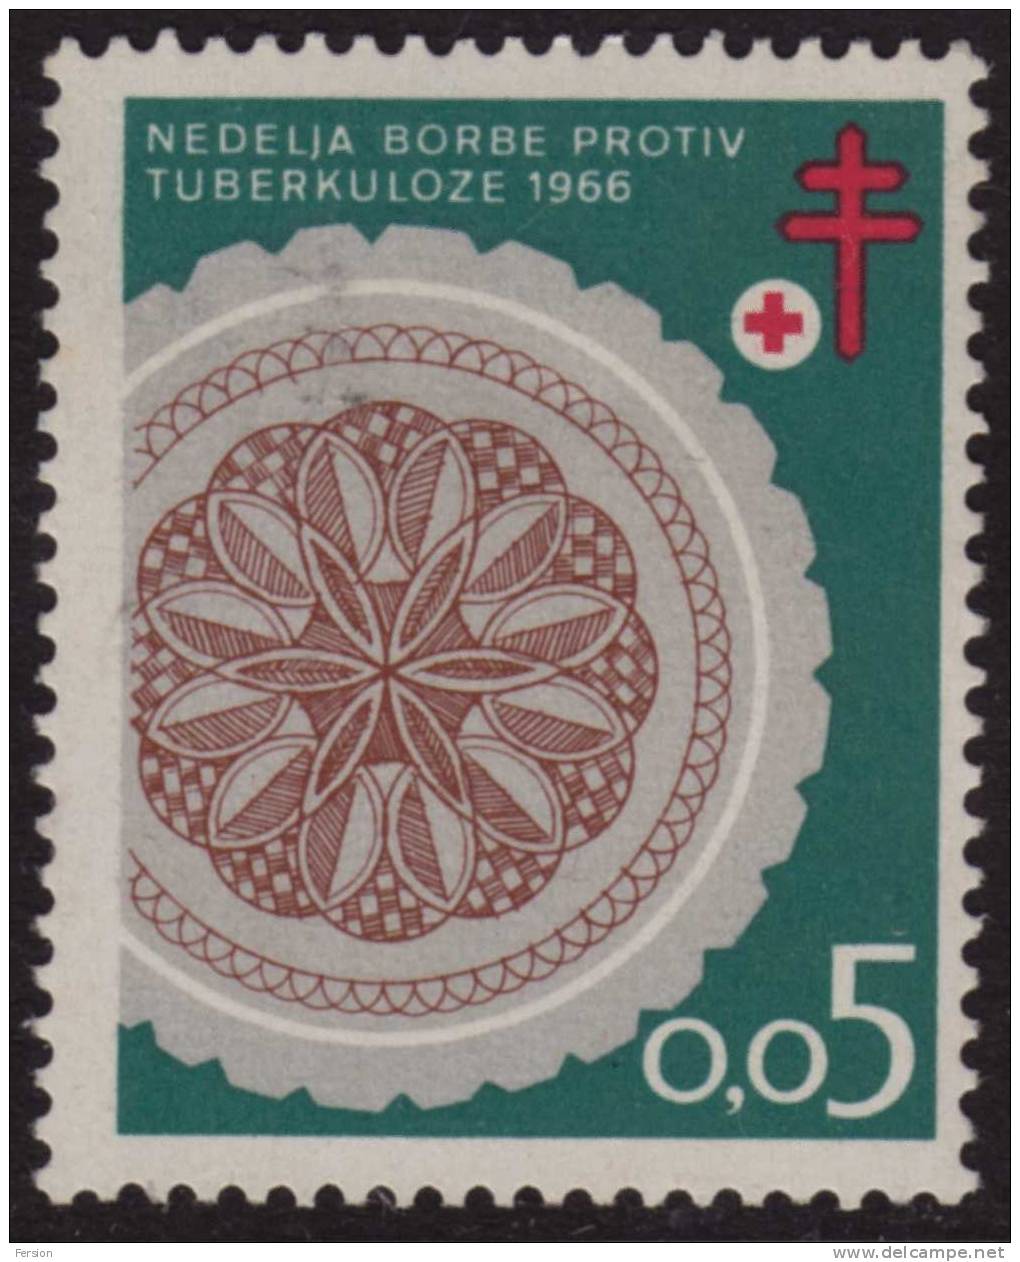 1966 Yugoslavia - Red Cross - Tuberculosis - Additional Stamp - MNH - Wohlfahrtsmarken